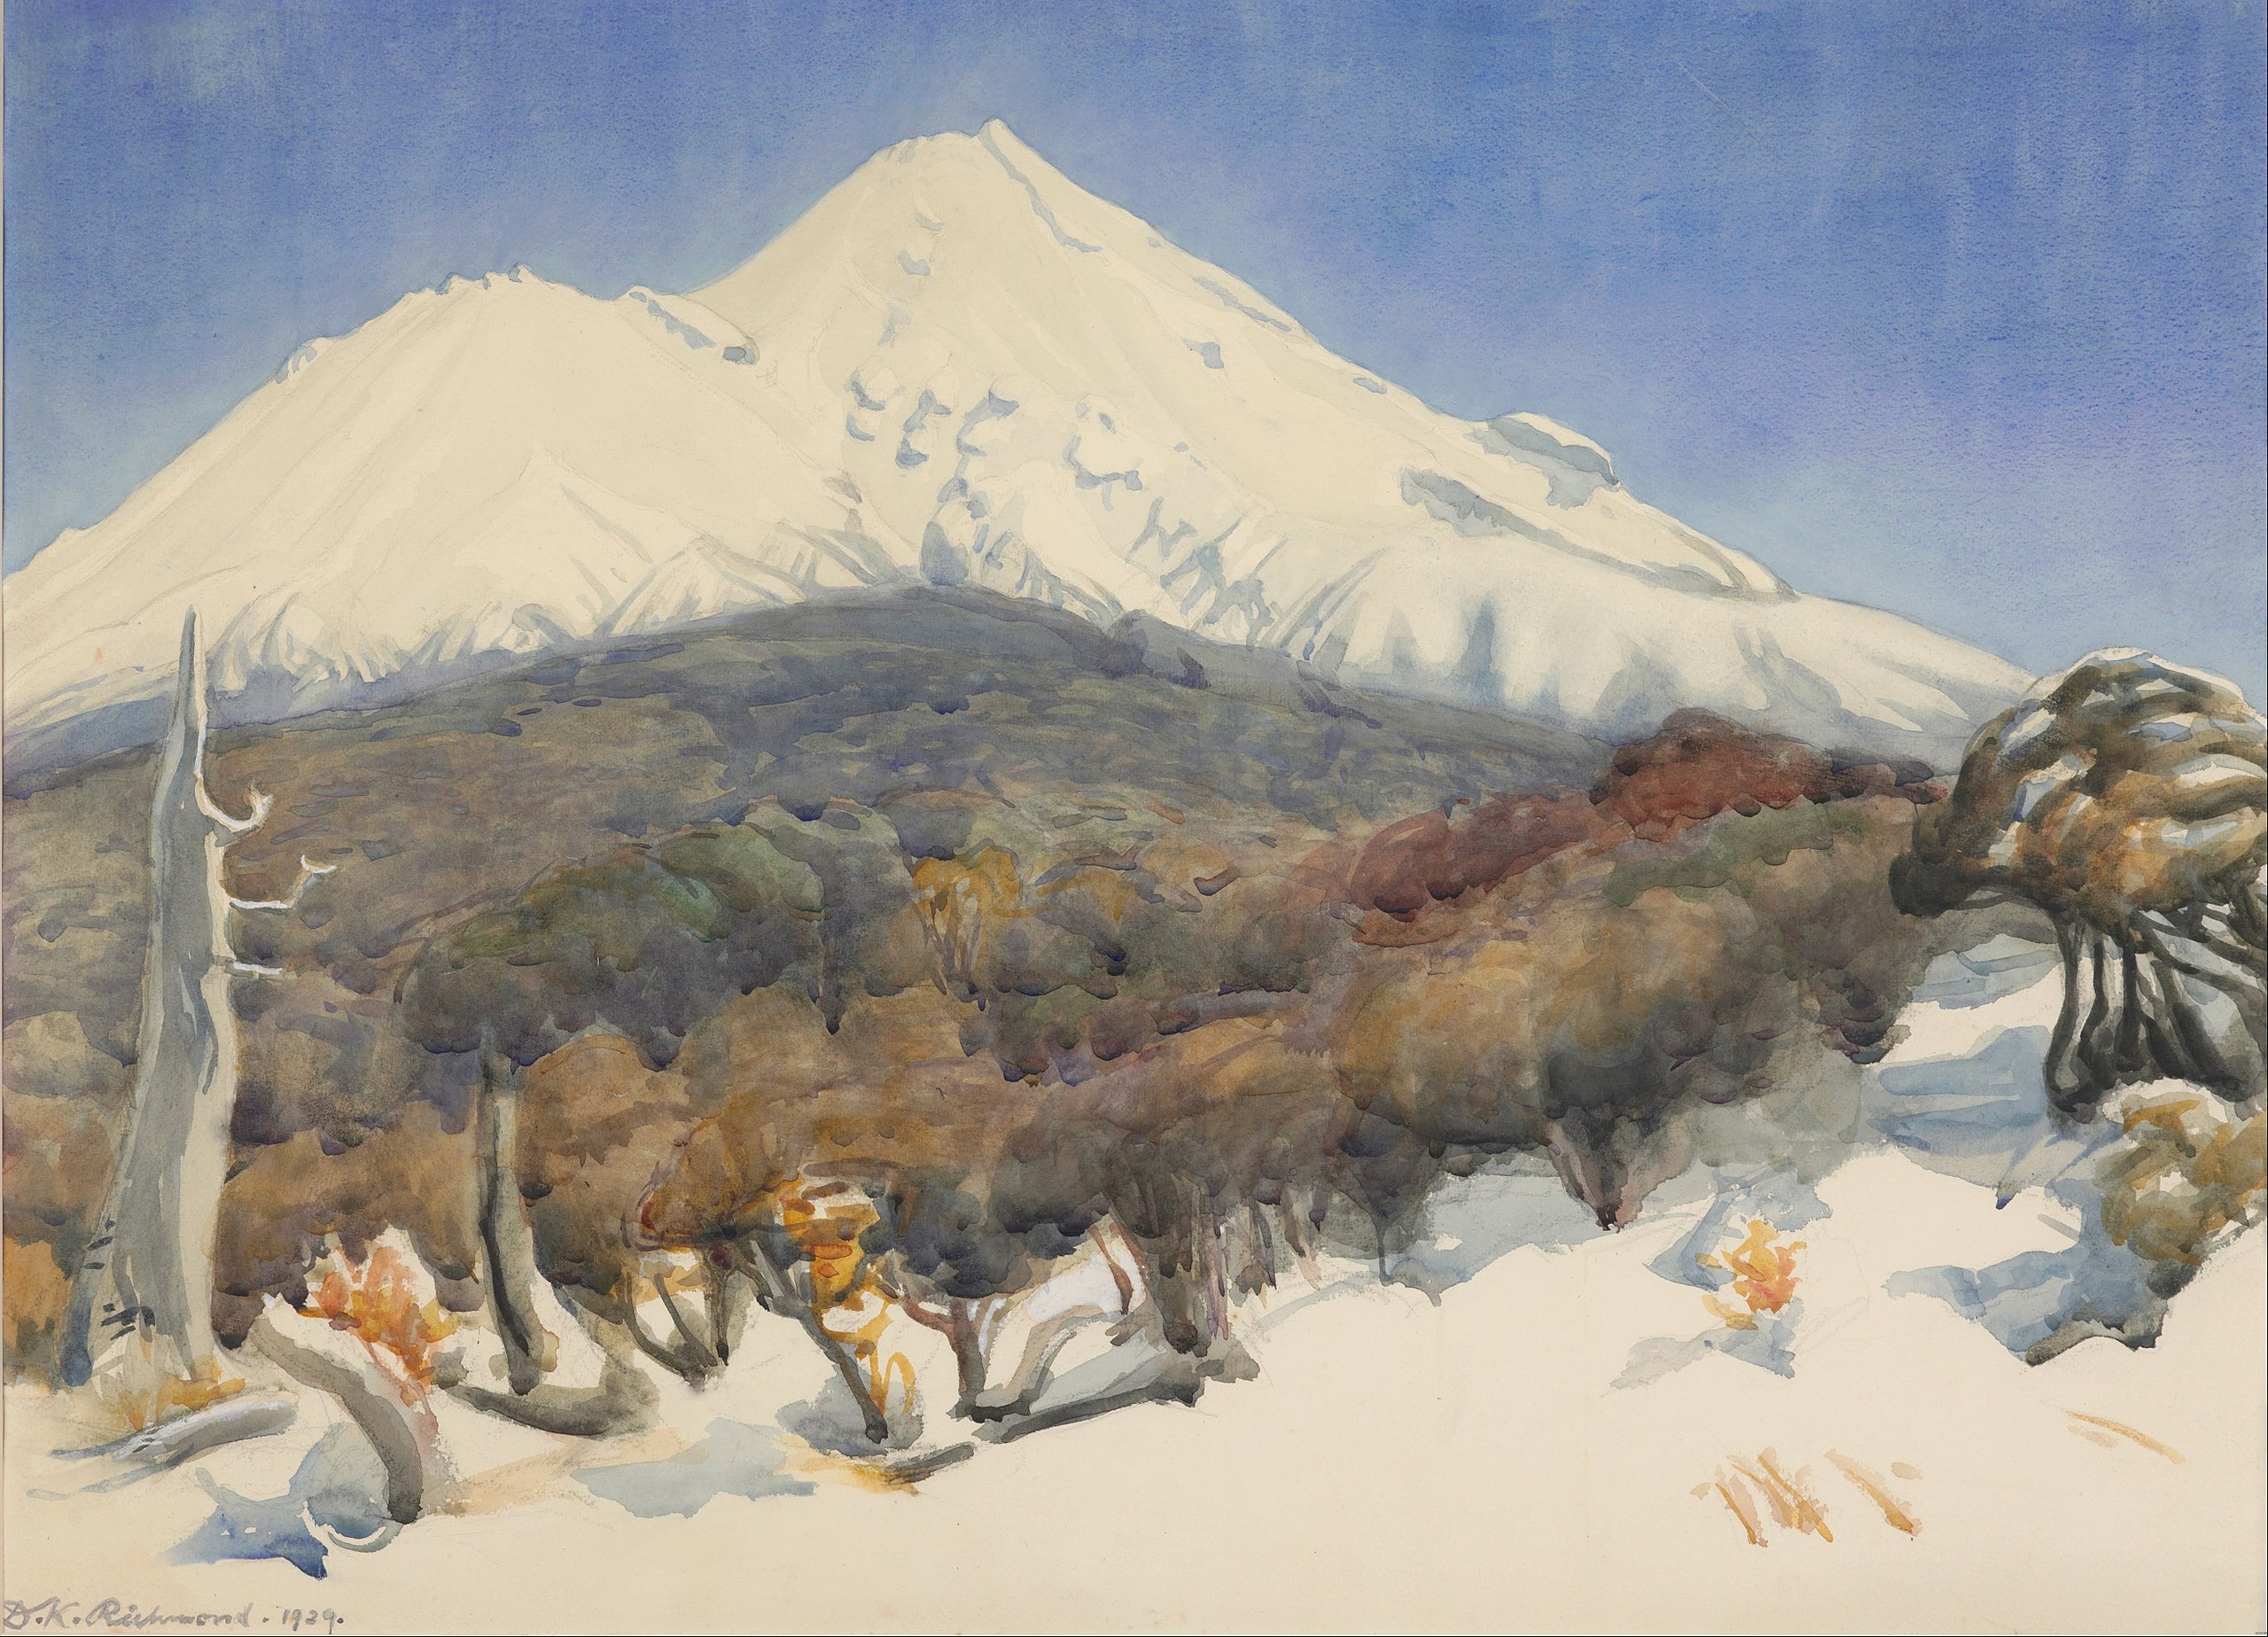 Mount Egmont by Dorothy Richmond - 1929 - 57.4 x 75.1 cm Museum of New Zealand Te Papa Tongarewa